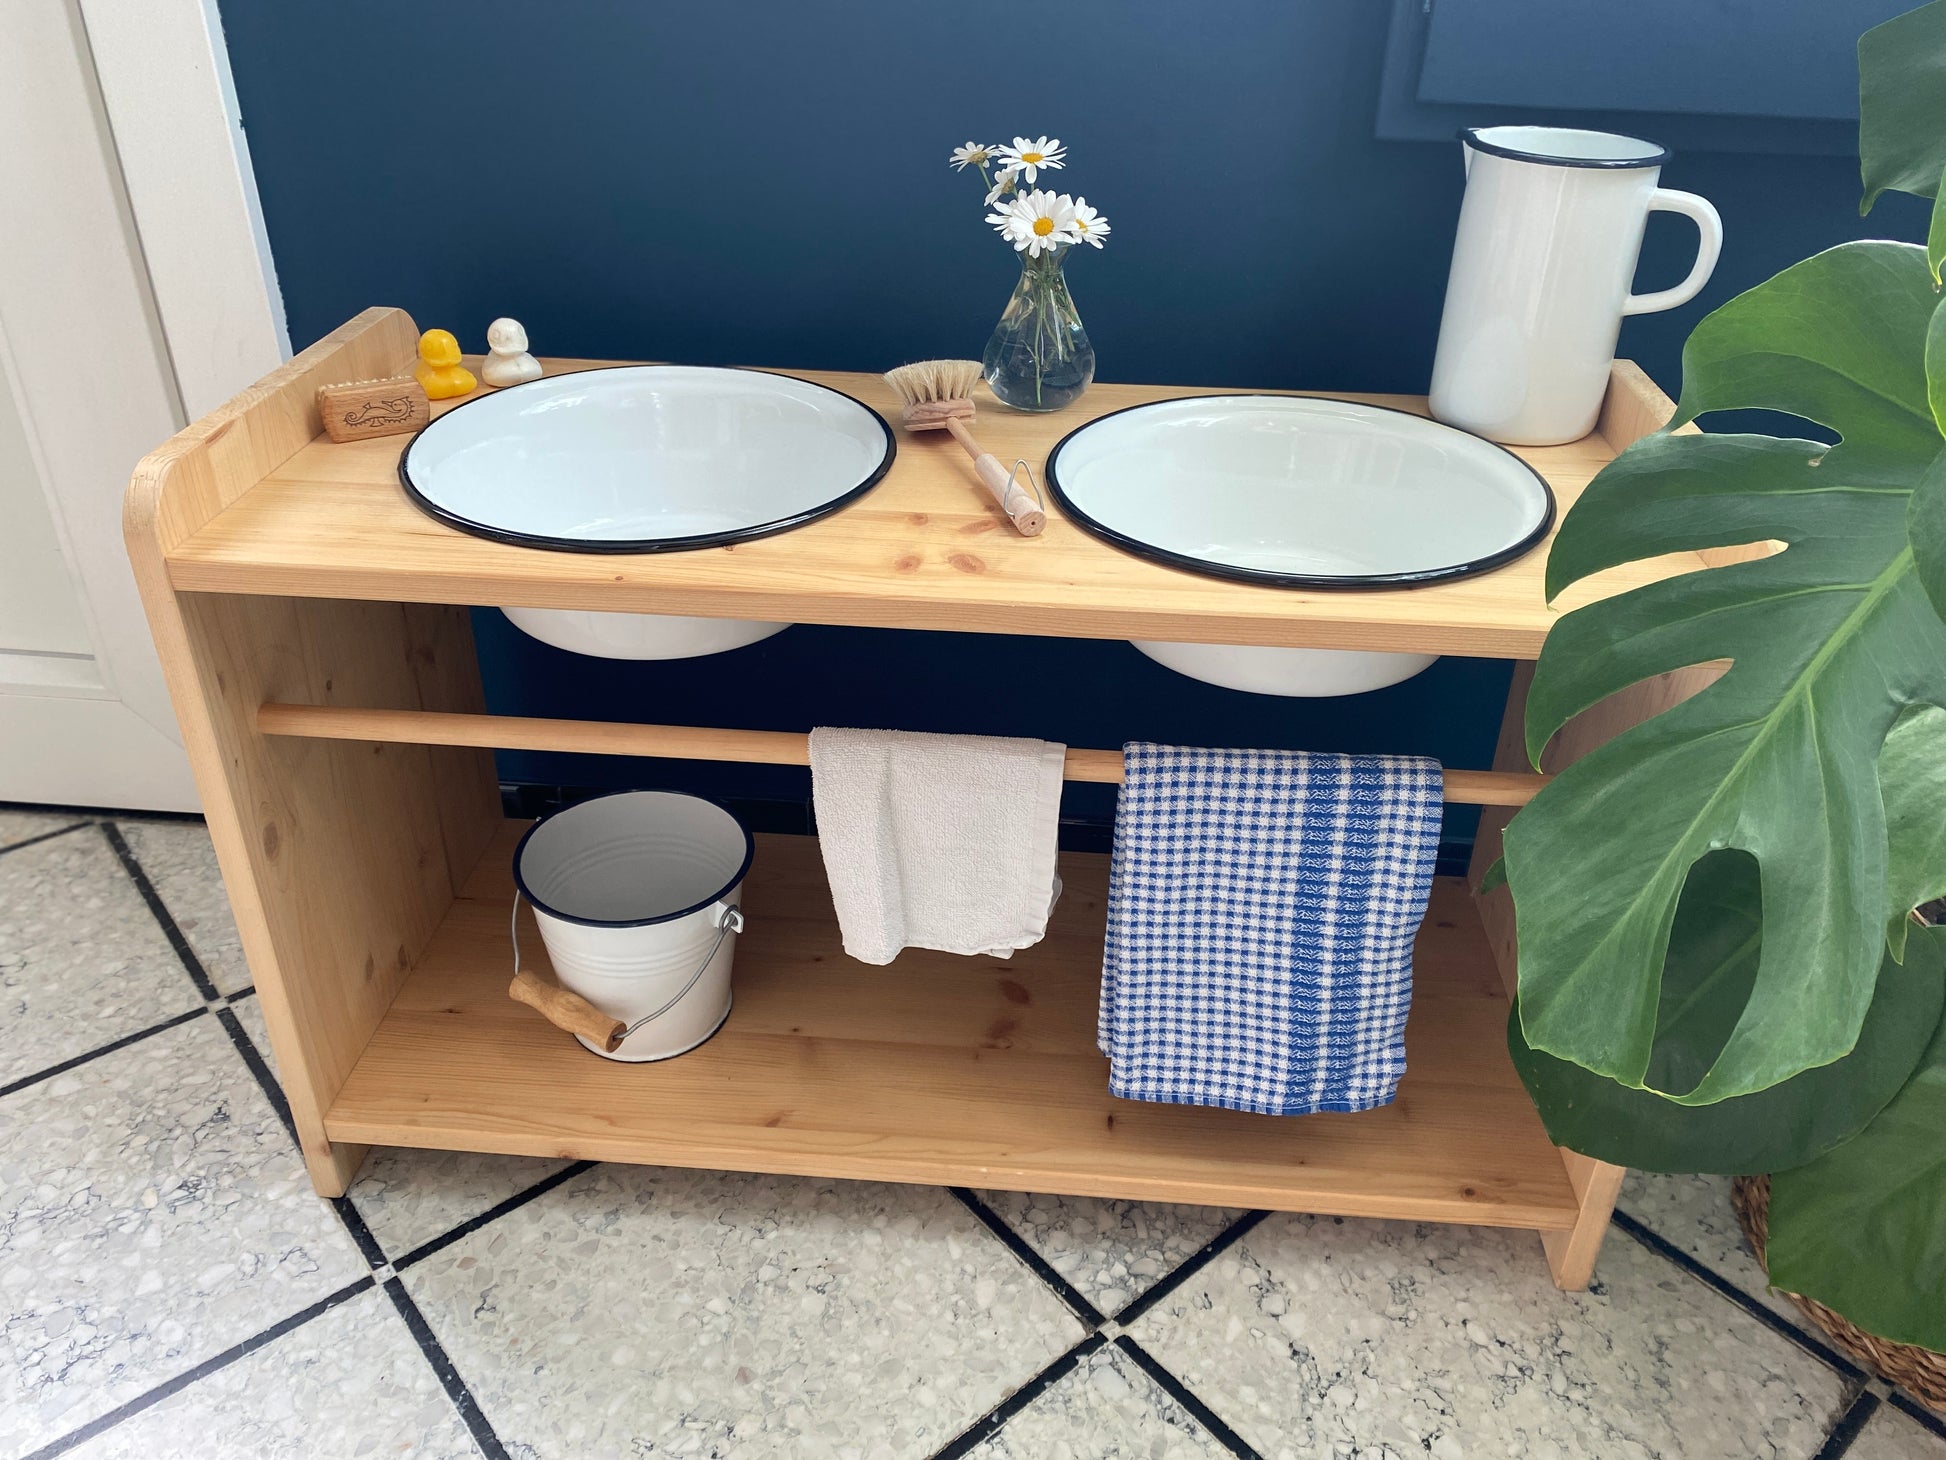 Station de lavage double Montessori Manine – Manine Montessori